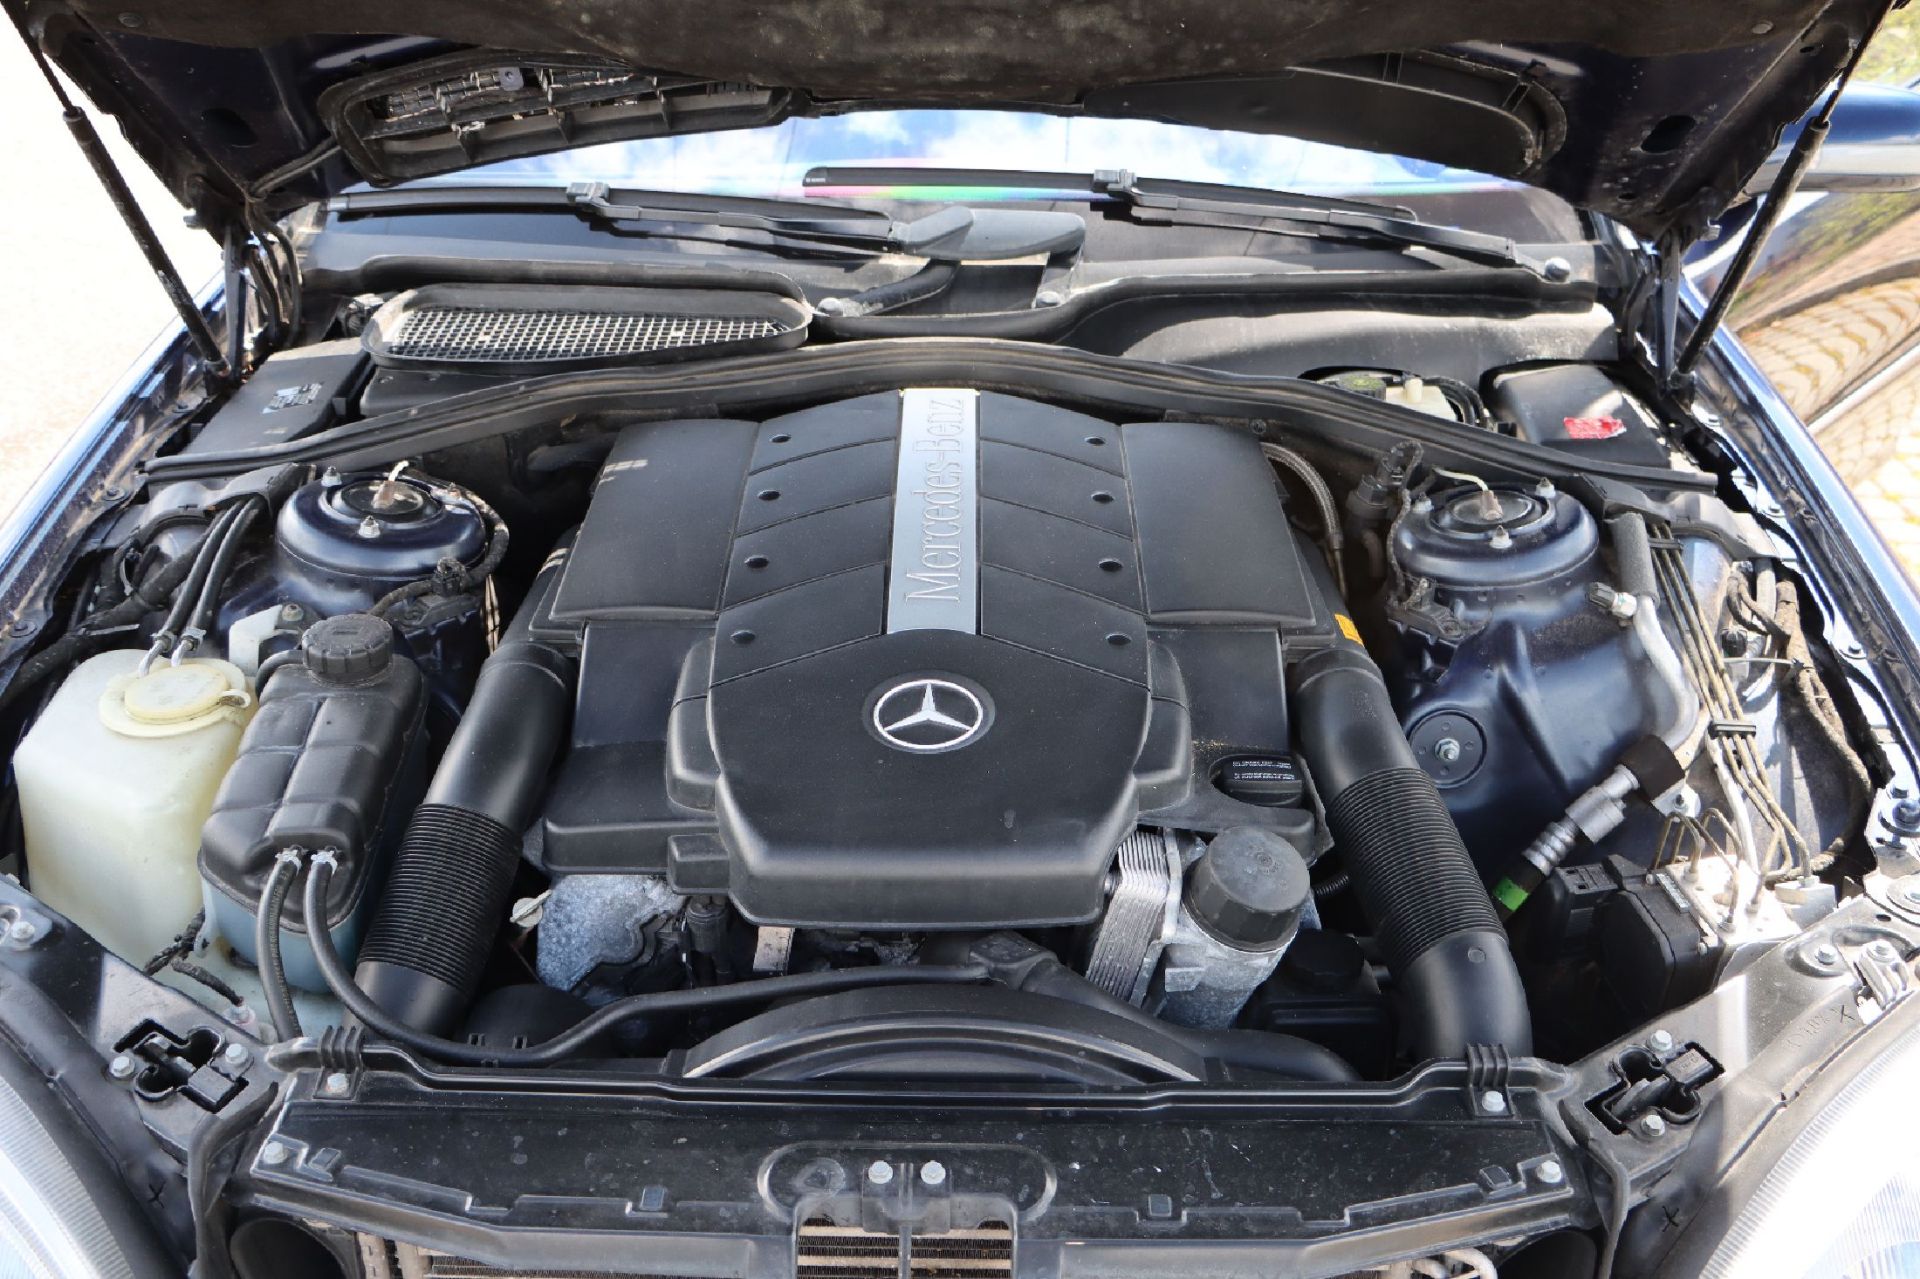 Mercedes-Benz S500, Fahrgestellnummer: WDB2200751A124714, - Image 9 of 9